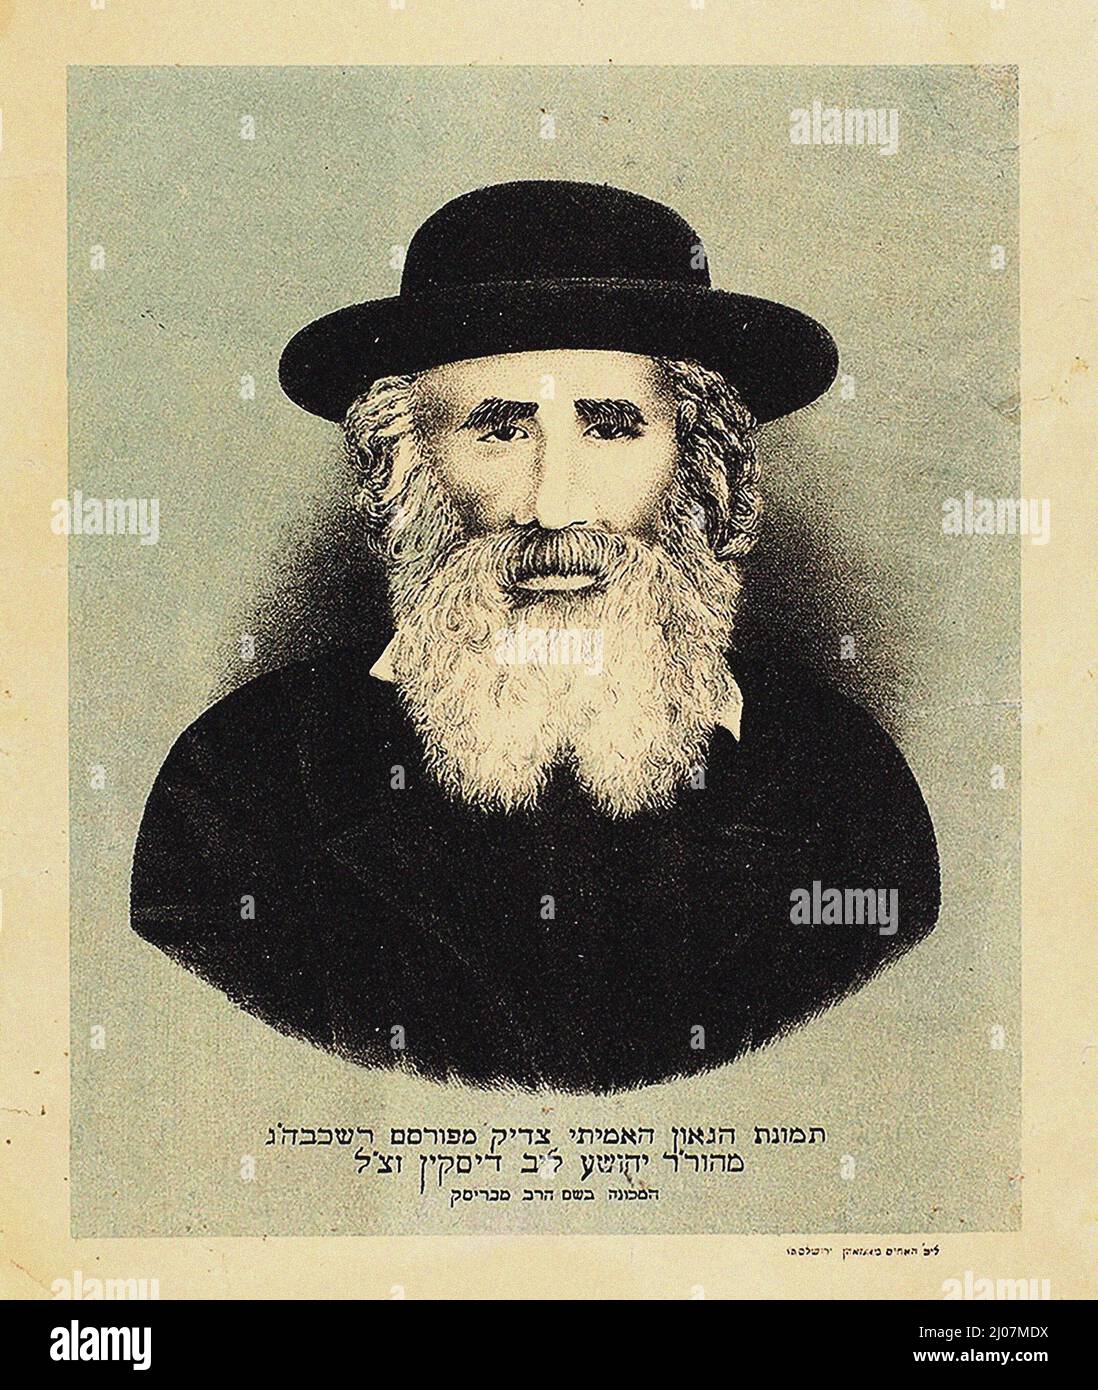 Rabbi Moshe Yehoshua Yehuda Leib Diskin (1818-1898). Museum: PRIVATE COLLECTION. Author: Monsohn Brothers Lithography. Stock Photo